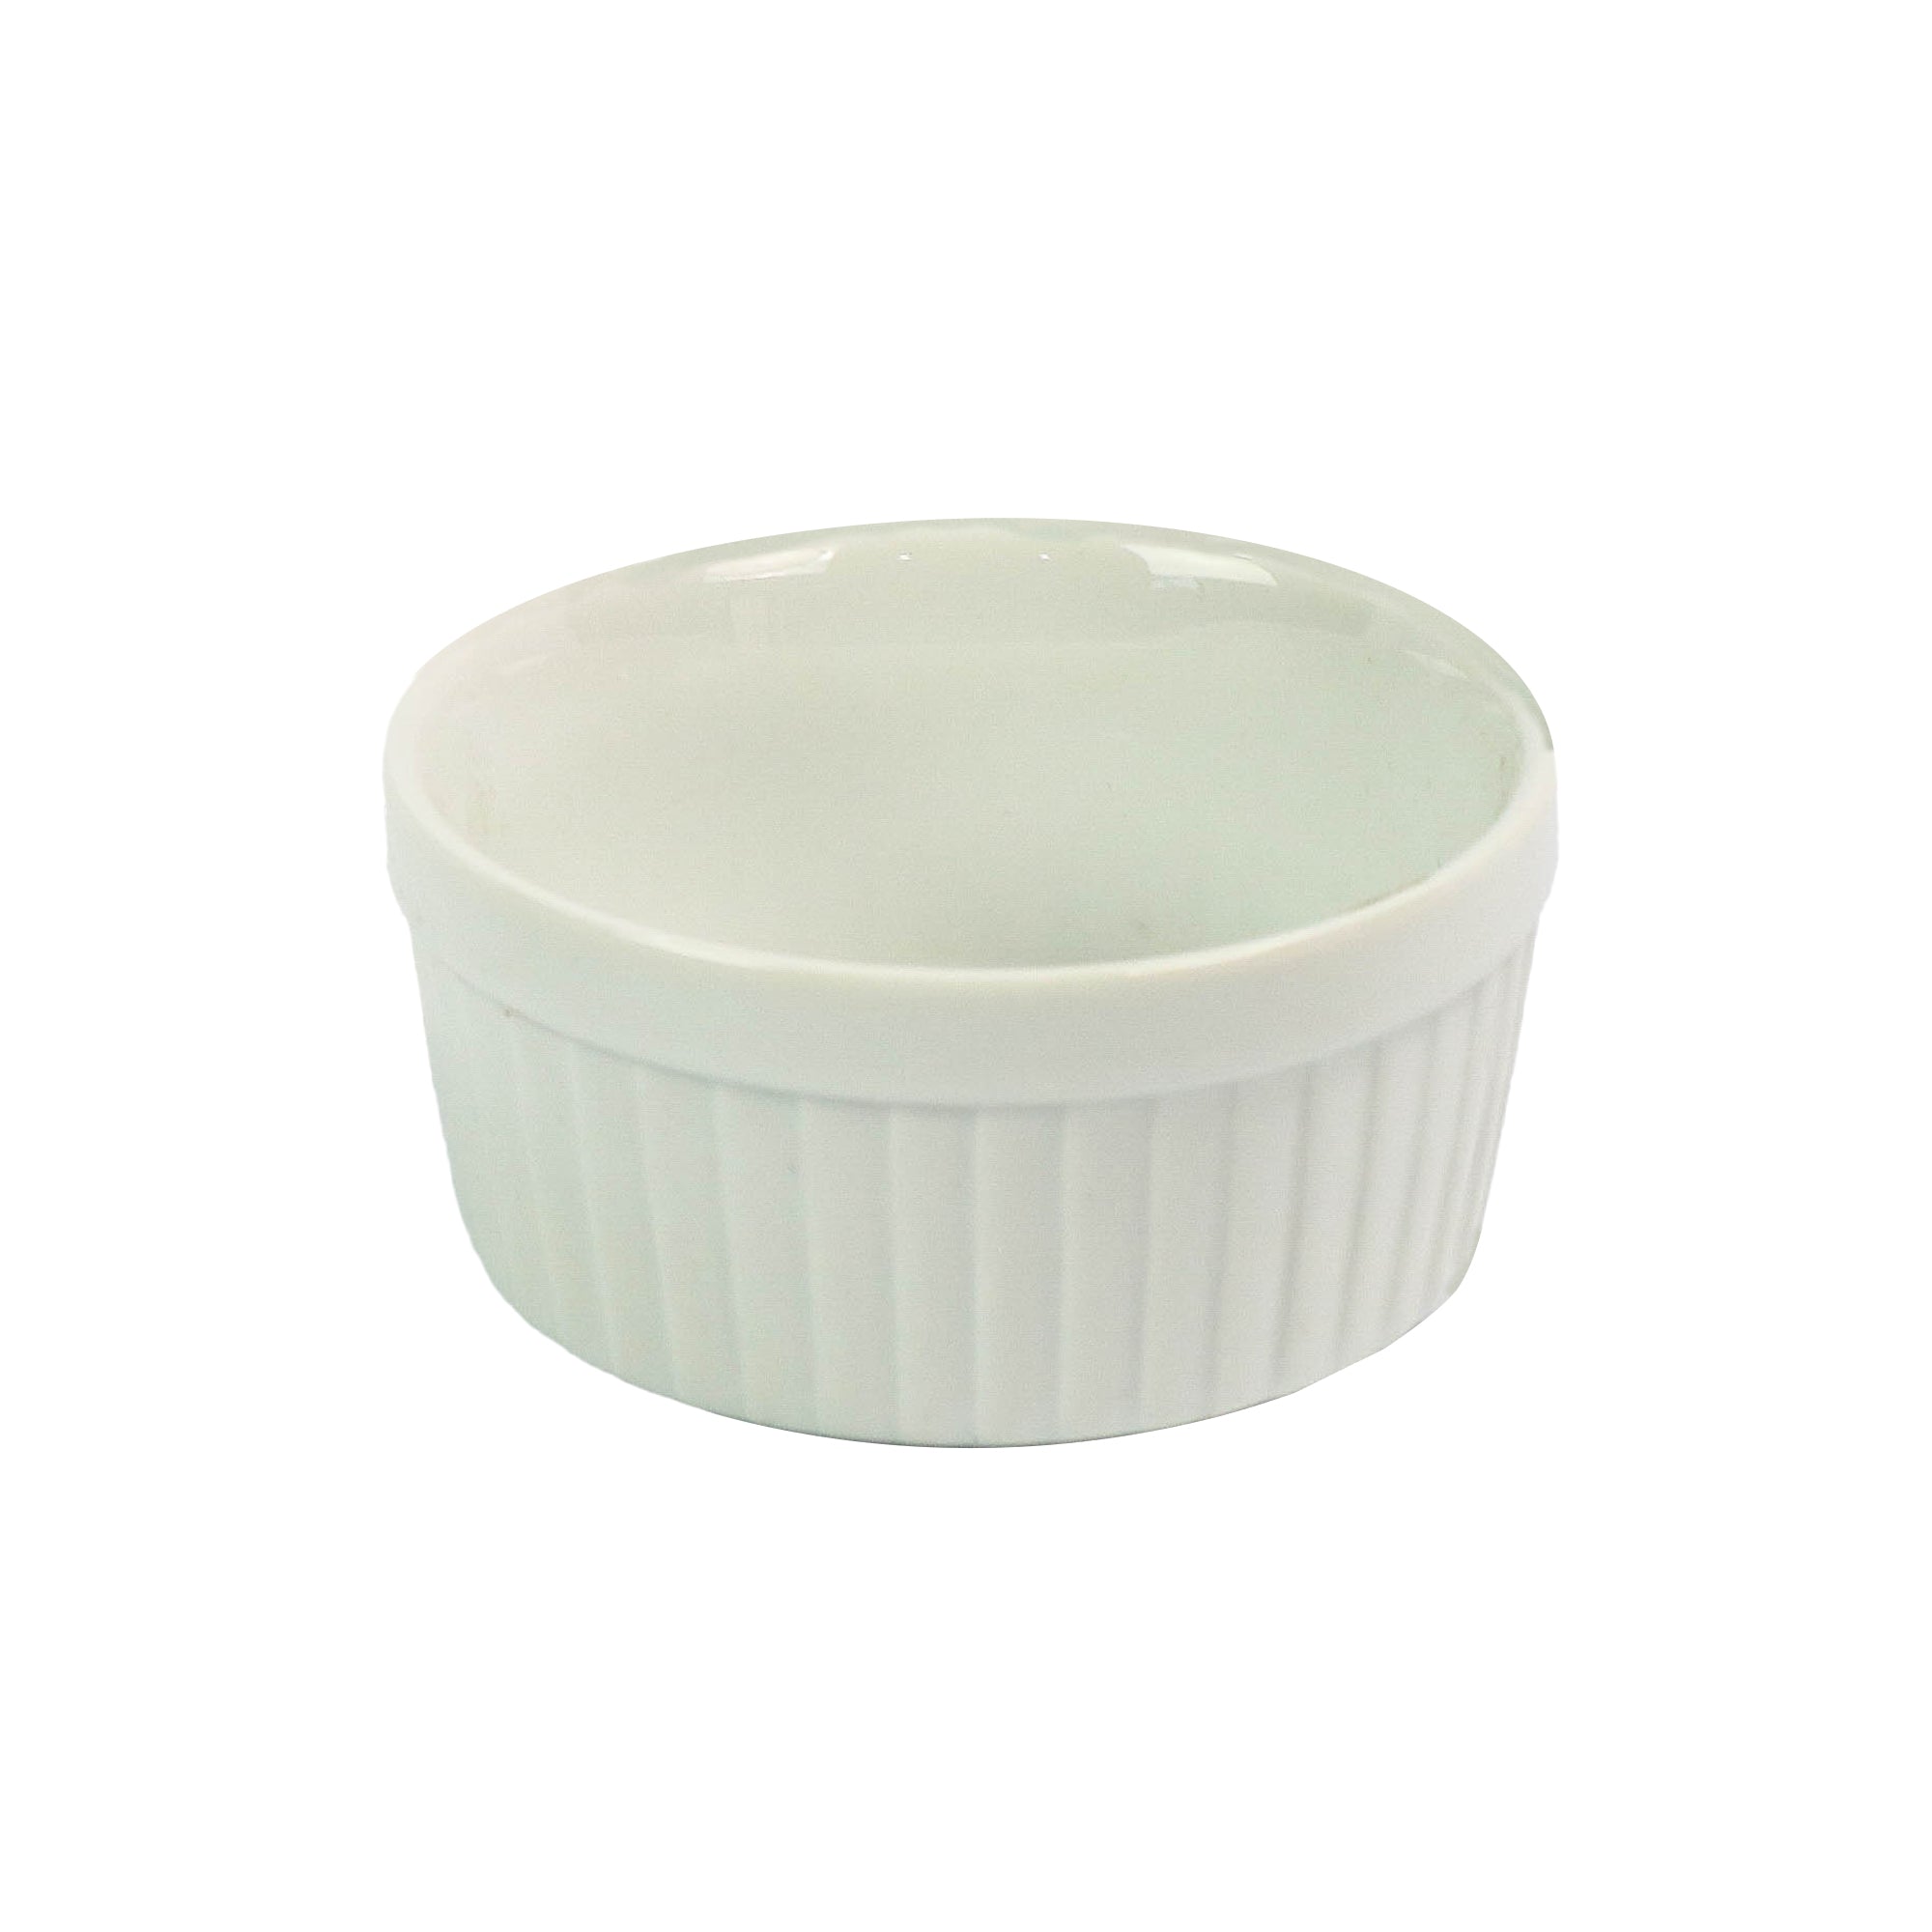 Ramekin Ceramic Ribbed 10inch 5cmx10cm White Baking Round Bowl